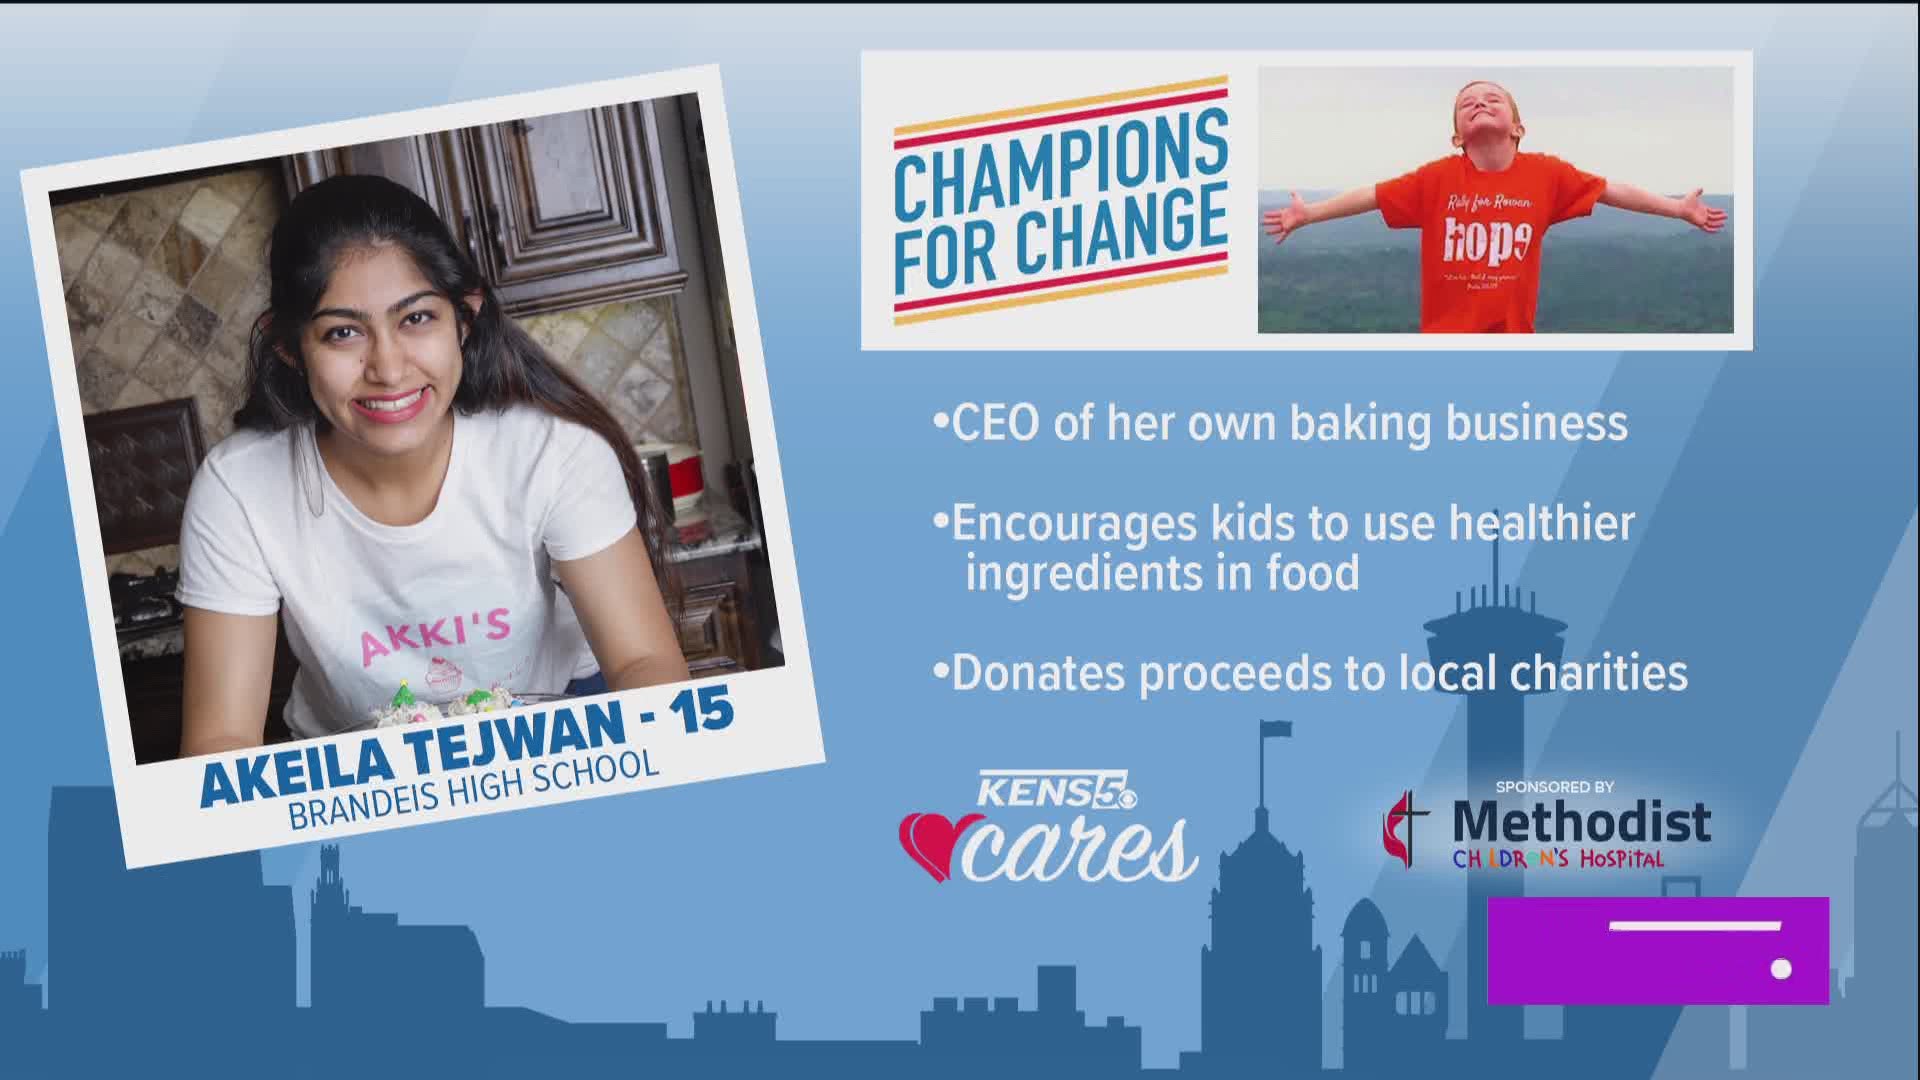 GREAT DAY SA: Champions For Change - Akeila Tejwan